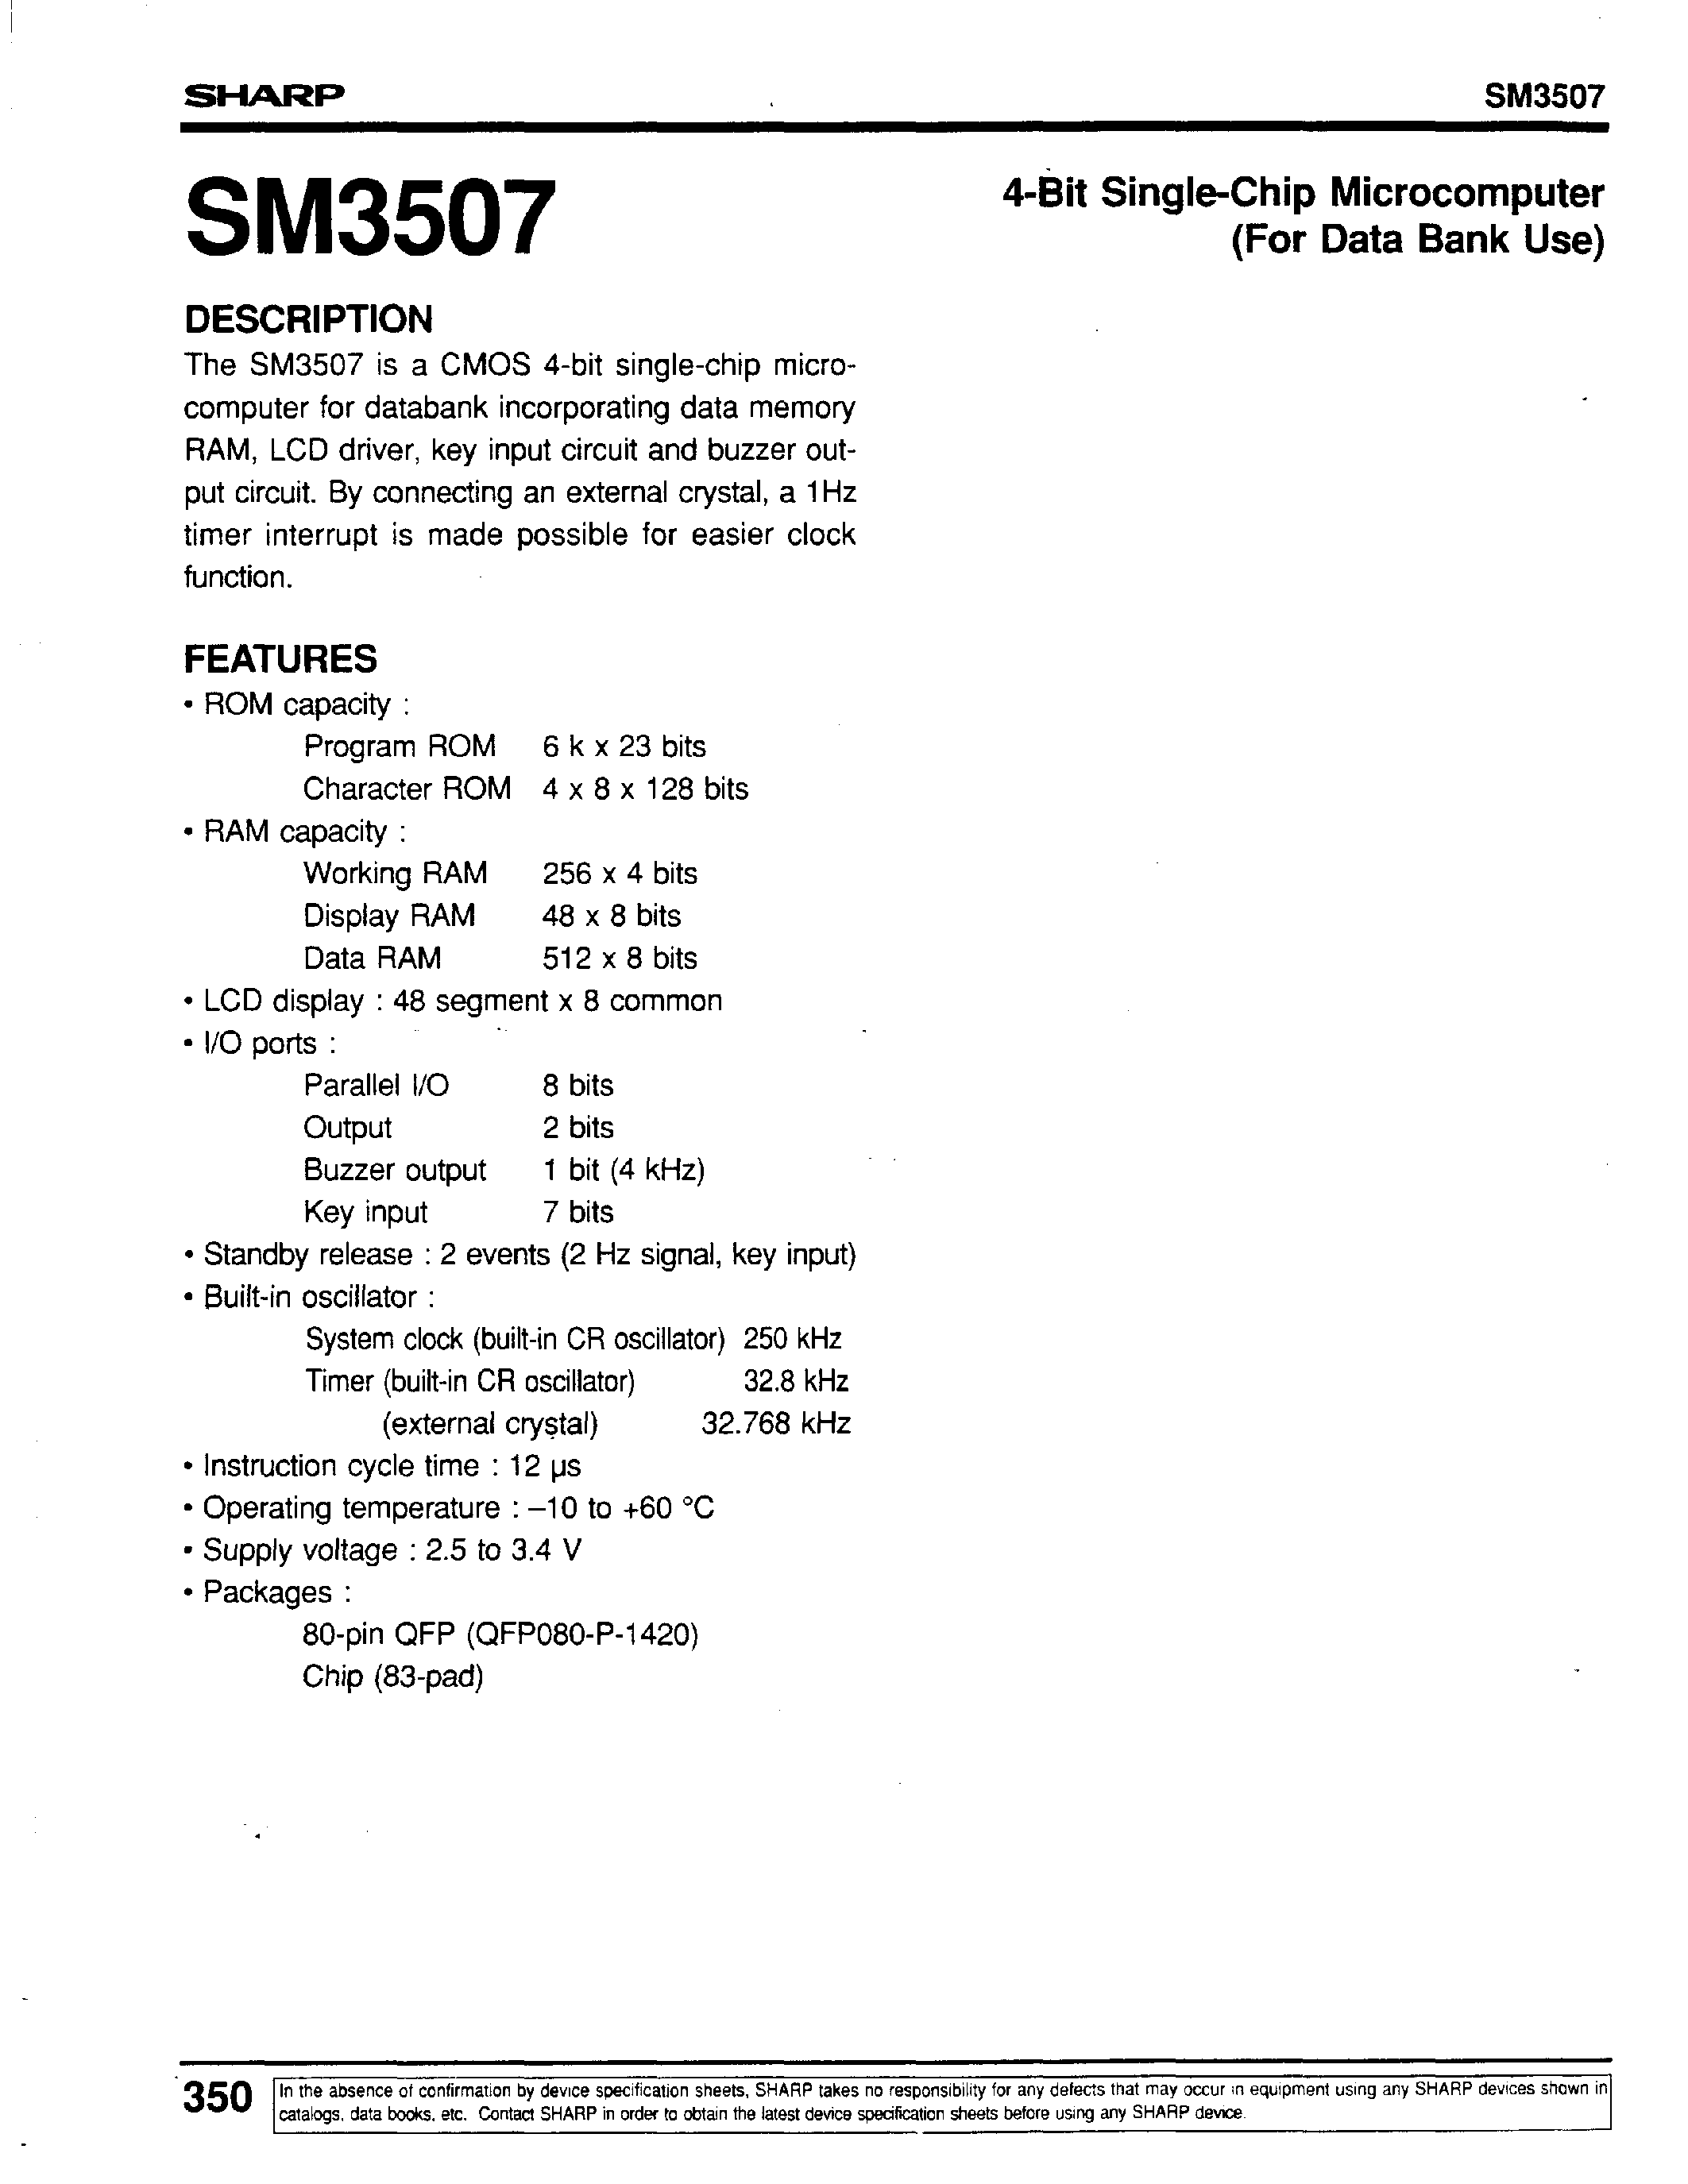 Datasheet SM3507 - 4-Bit Single-Chip Microcomputer(For Data Bank Use) page 1